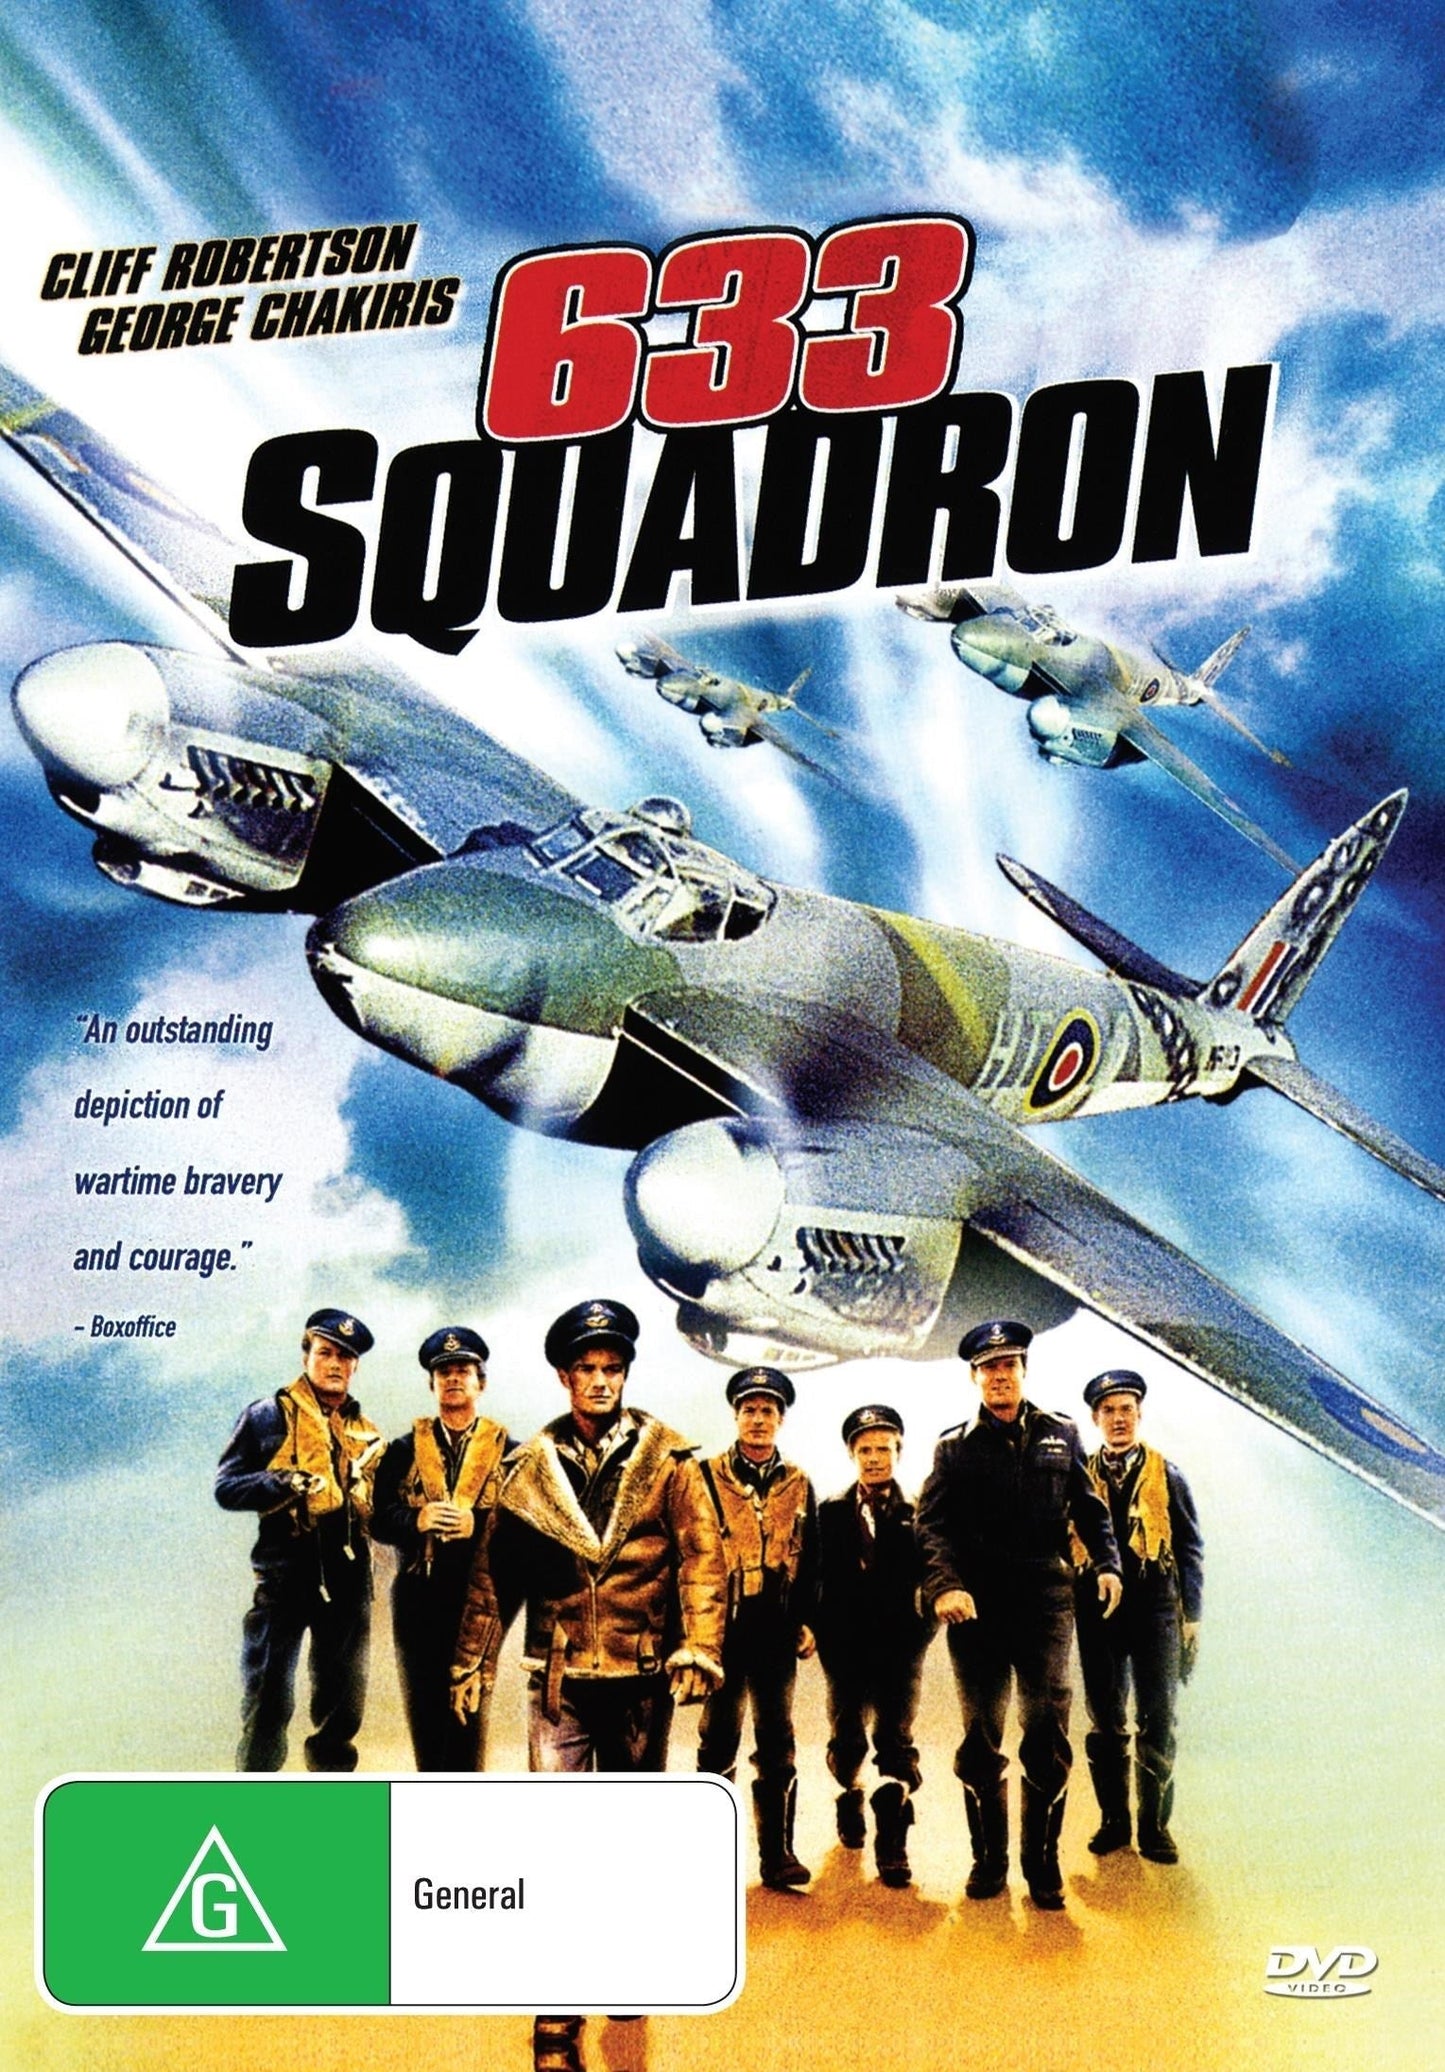 633 Squadron rareandcollectibledvds